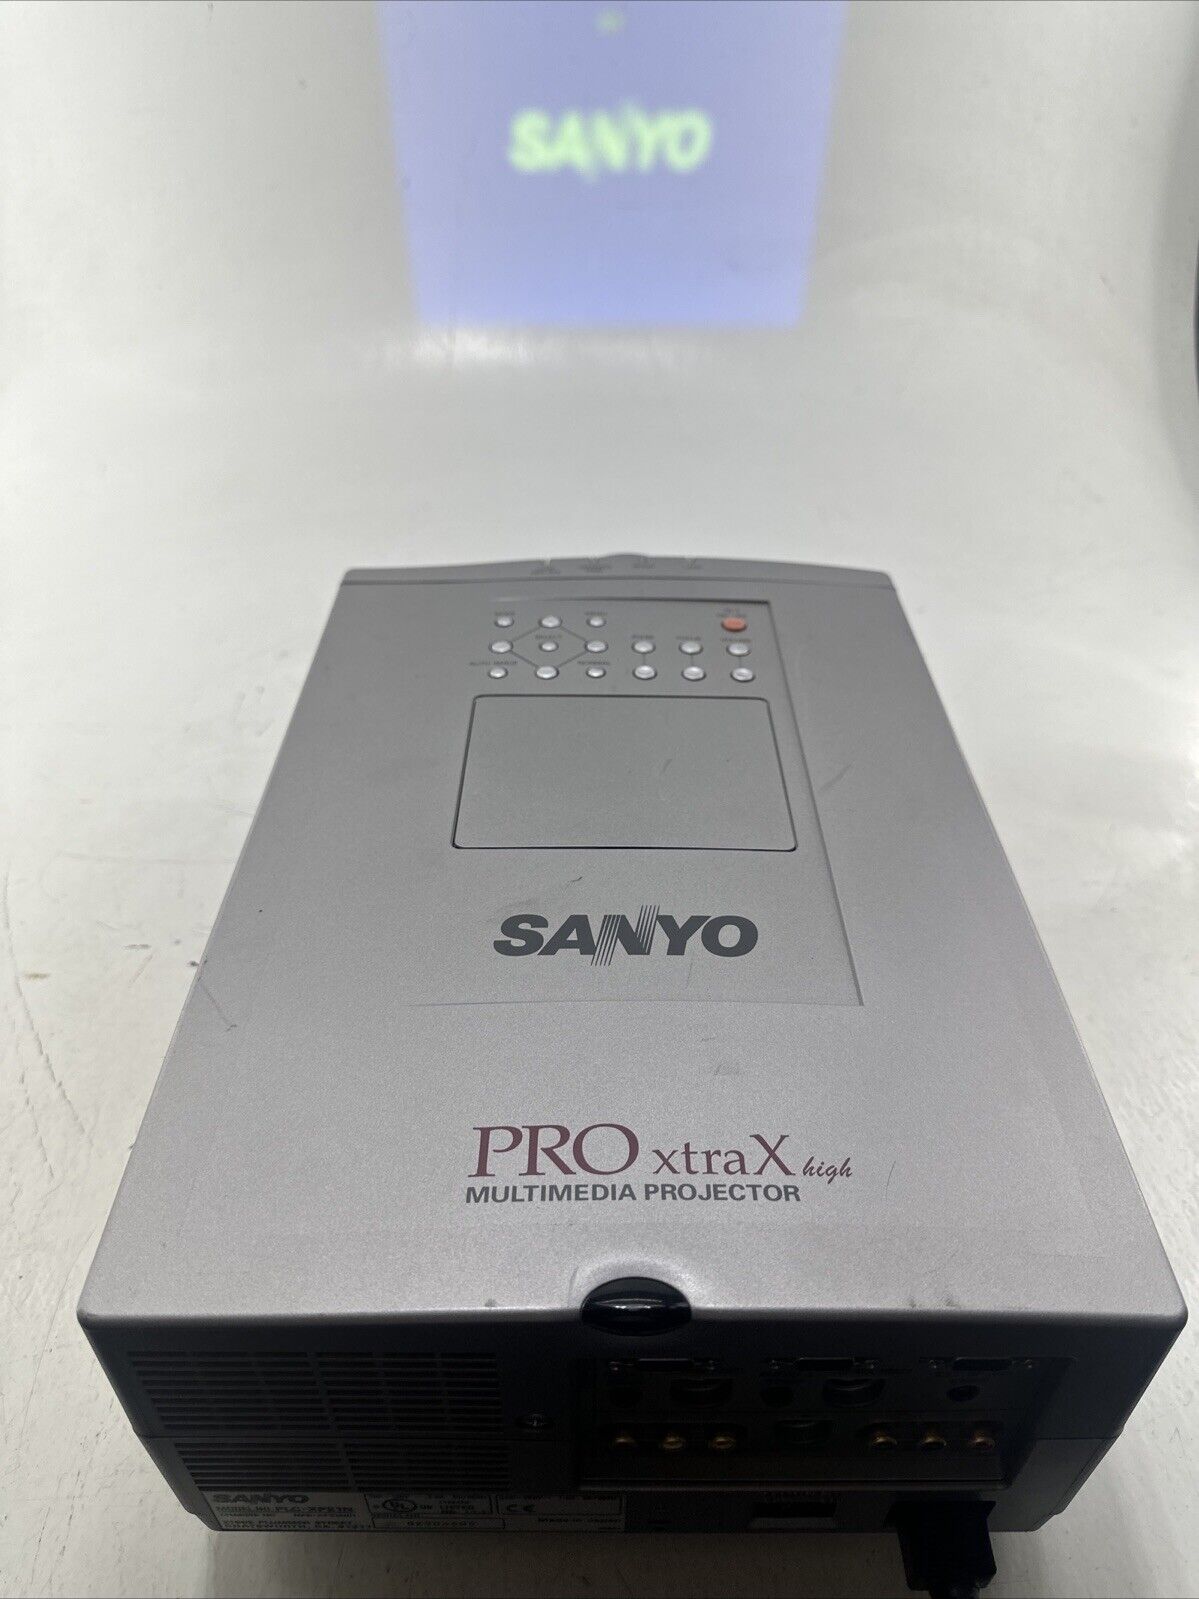 Sanyo PLC-XP21N Pro xtraX High Multimedia Projector 2500 Lumens